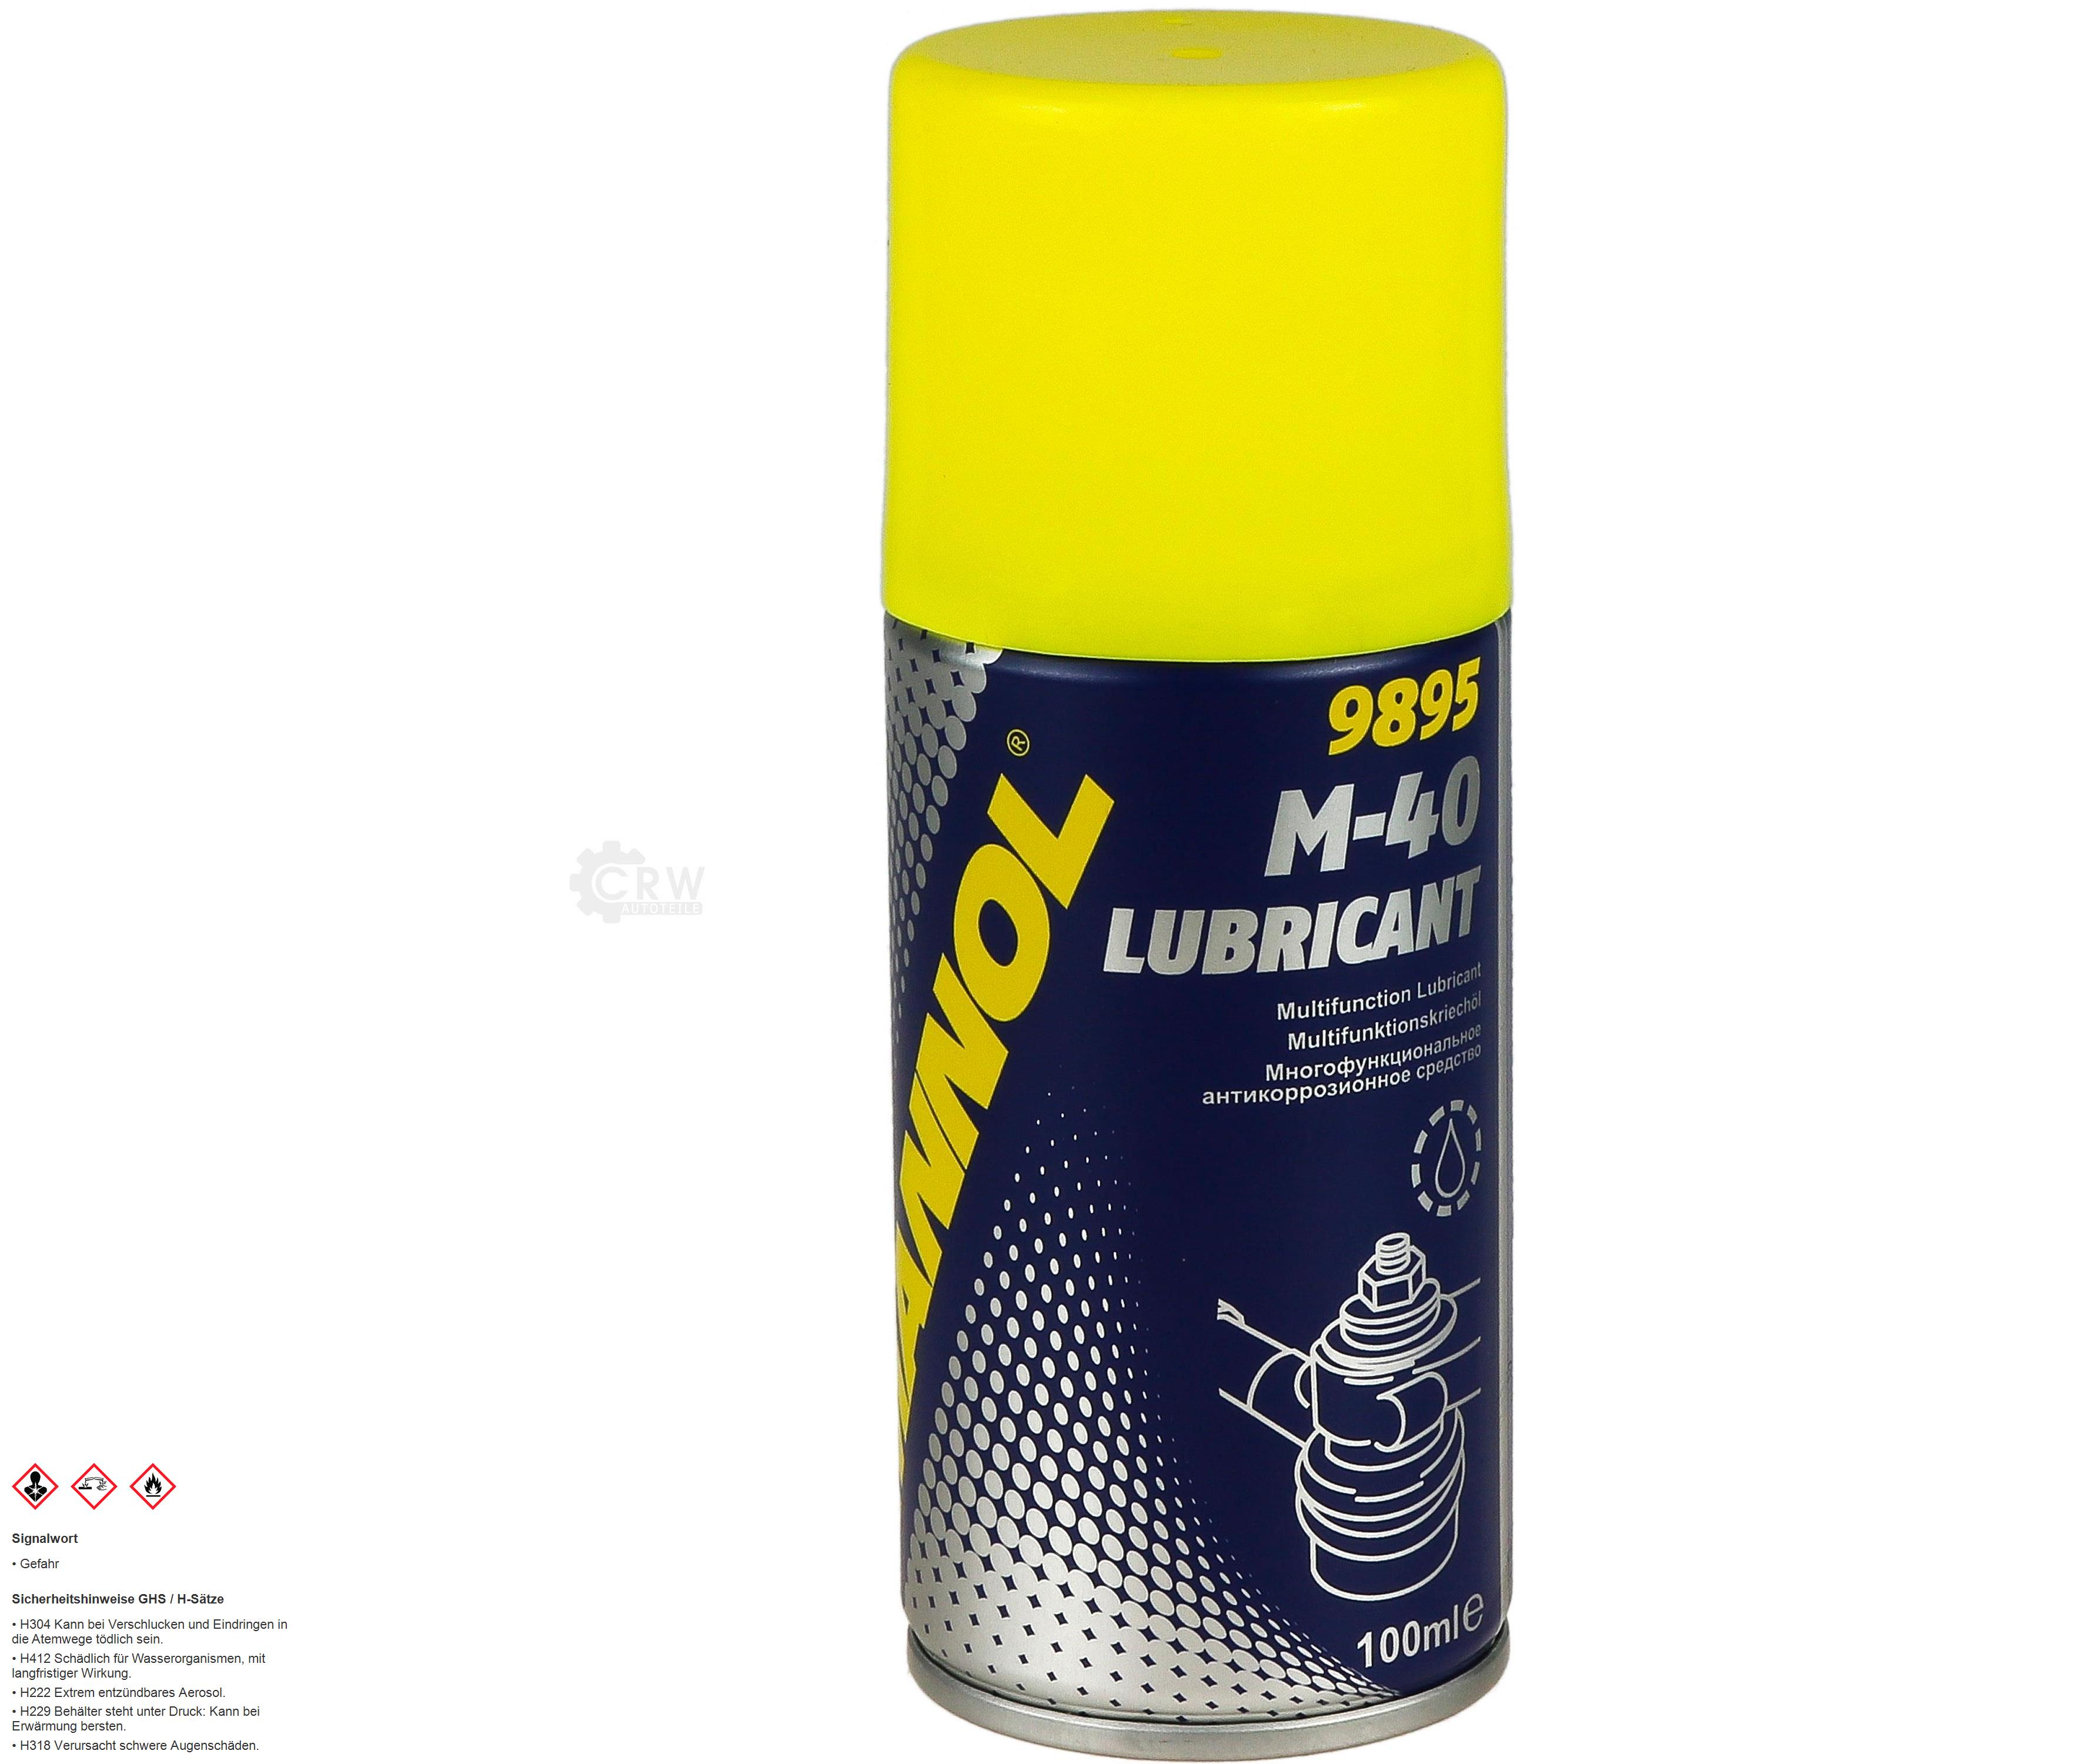 100ml MANNOL M-40 Lubricant Röstlöster Kriechöl Multifunktionsöl